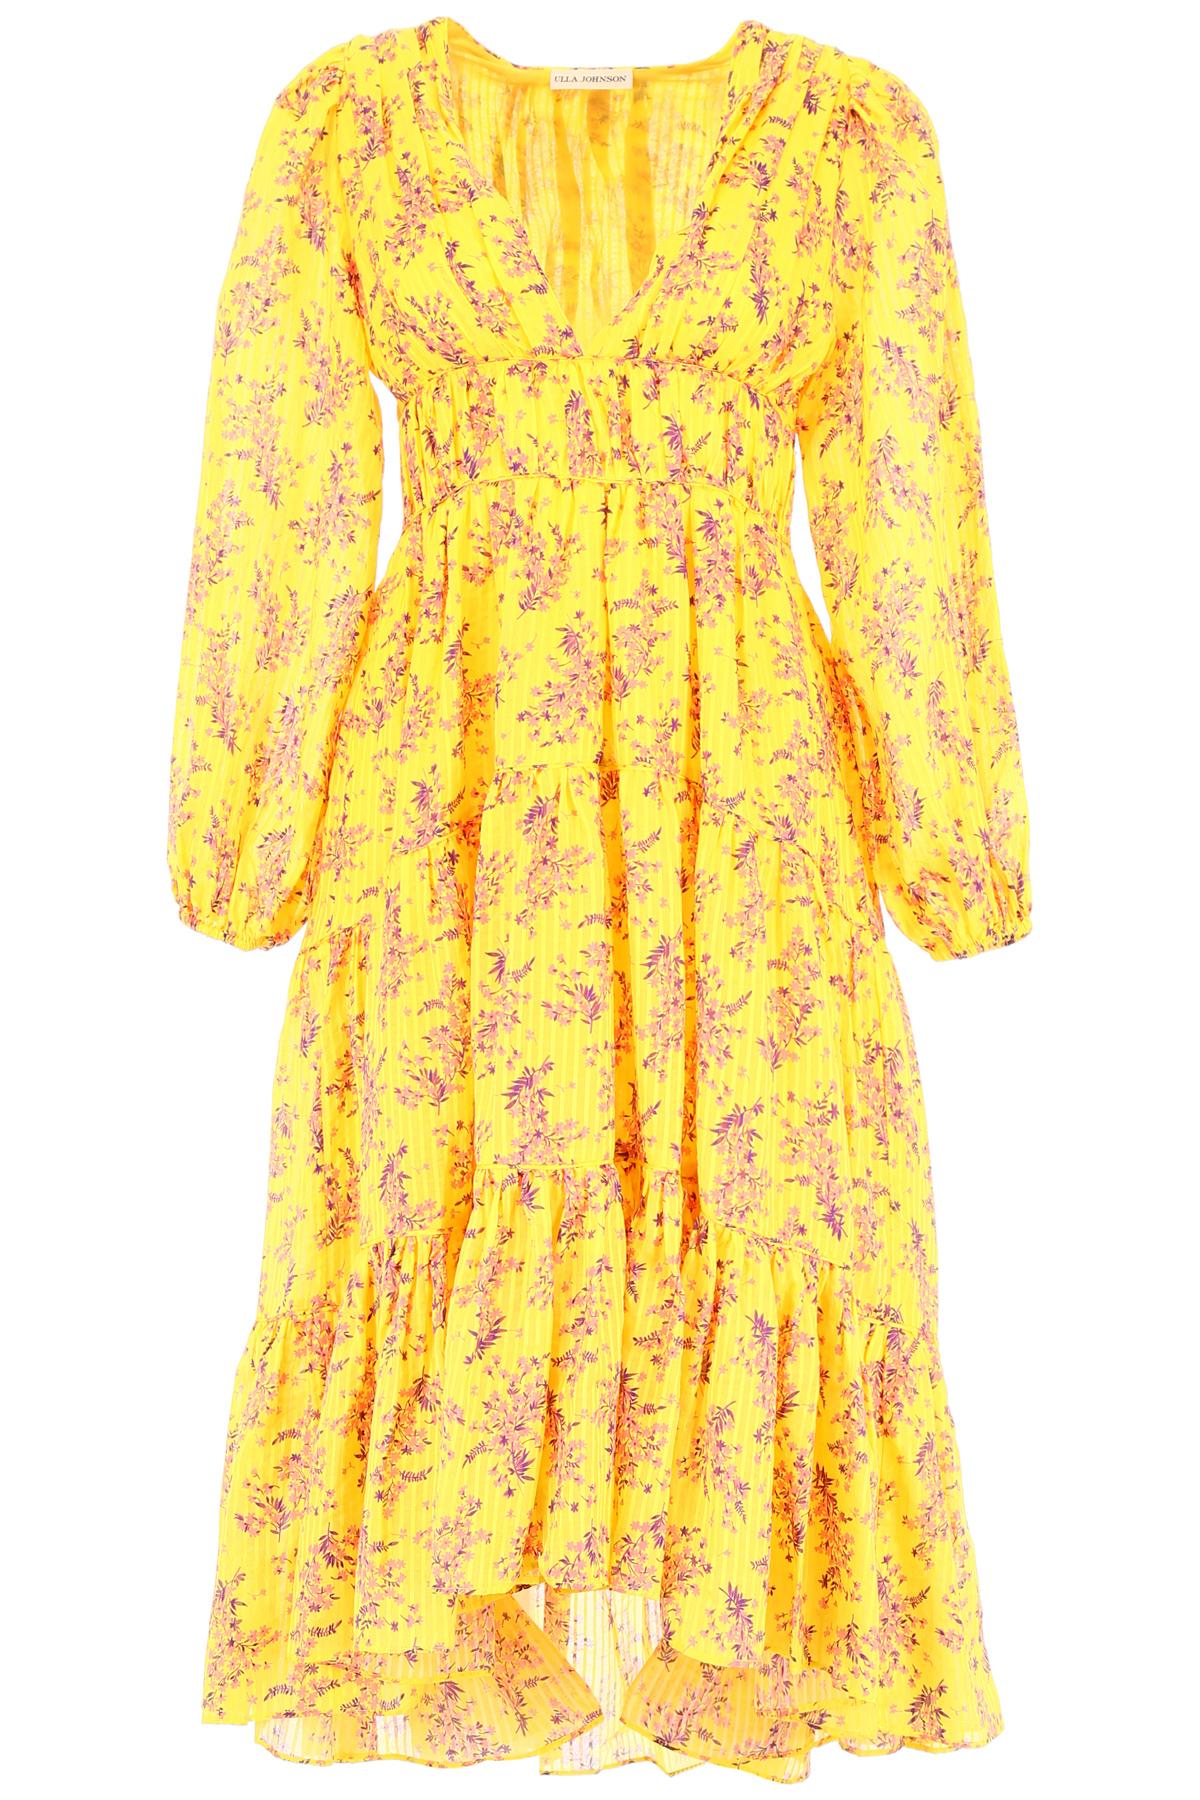 Ulla Johnson Cotton Joan Dress in Yellow - Save 24% - Lyst